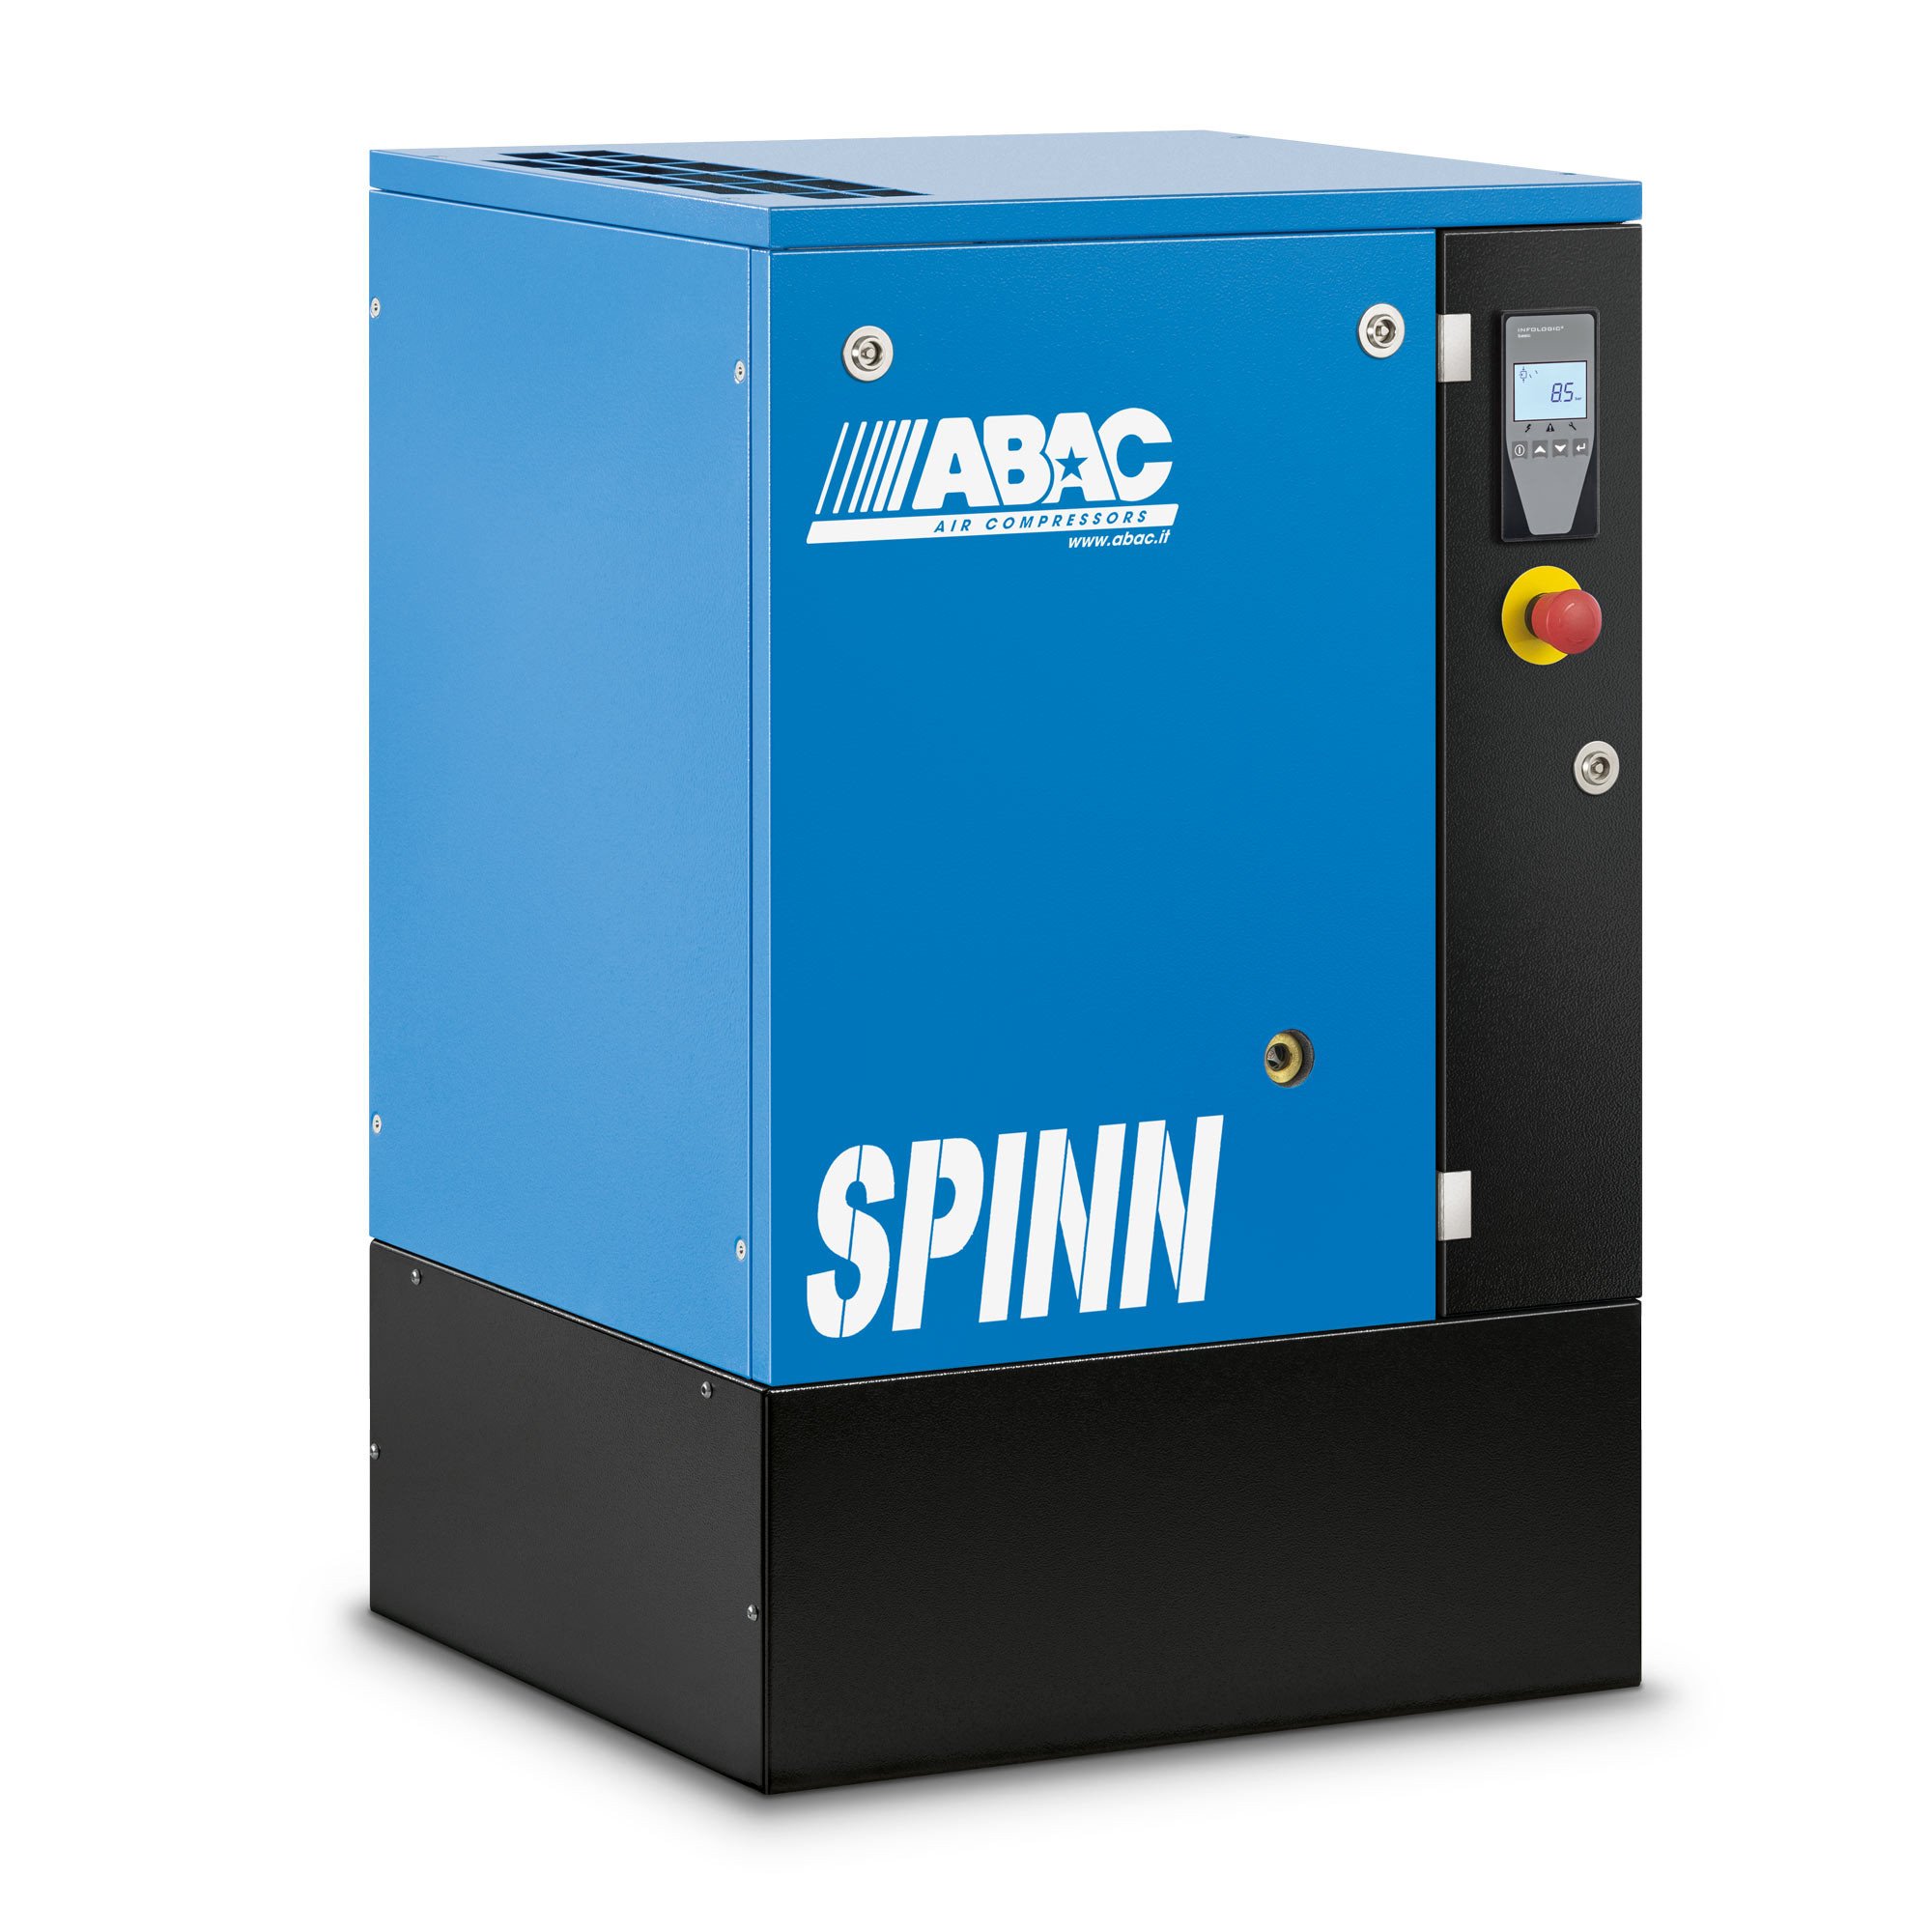 SPINN4 10 400/50 E CE、地板安装,18.2 cfm, 10条空气压缩机